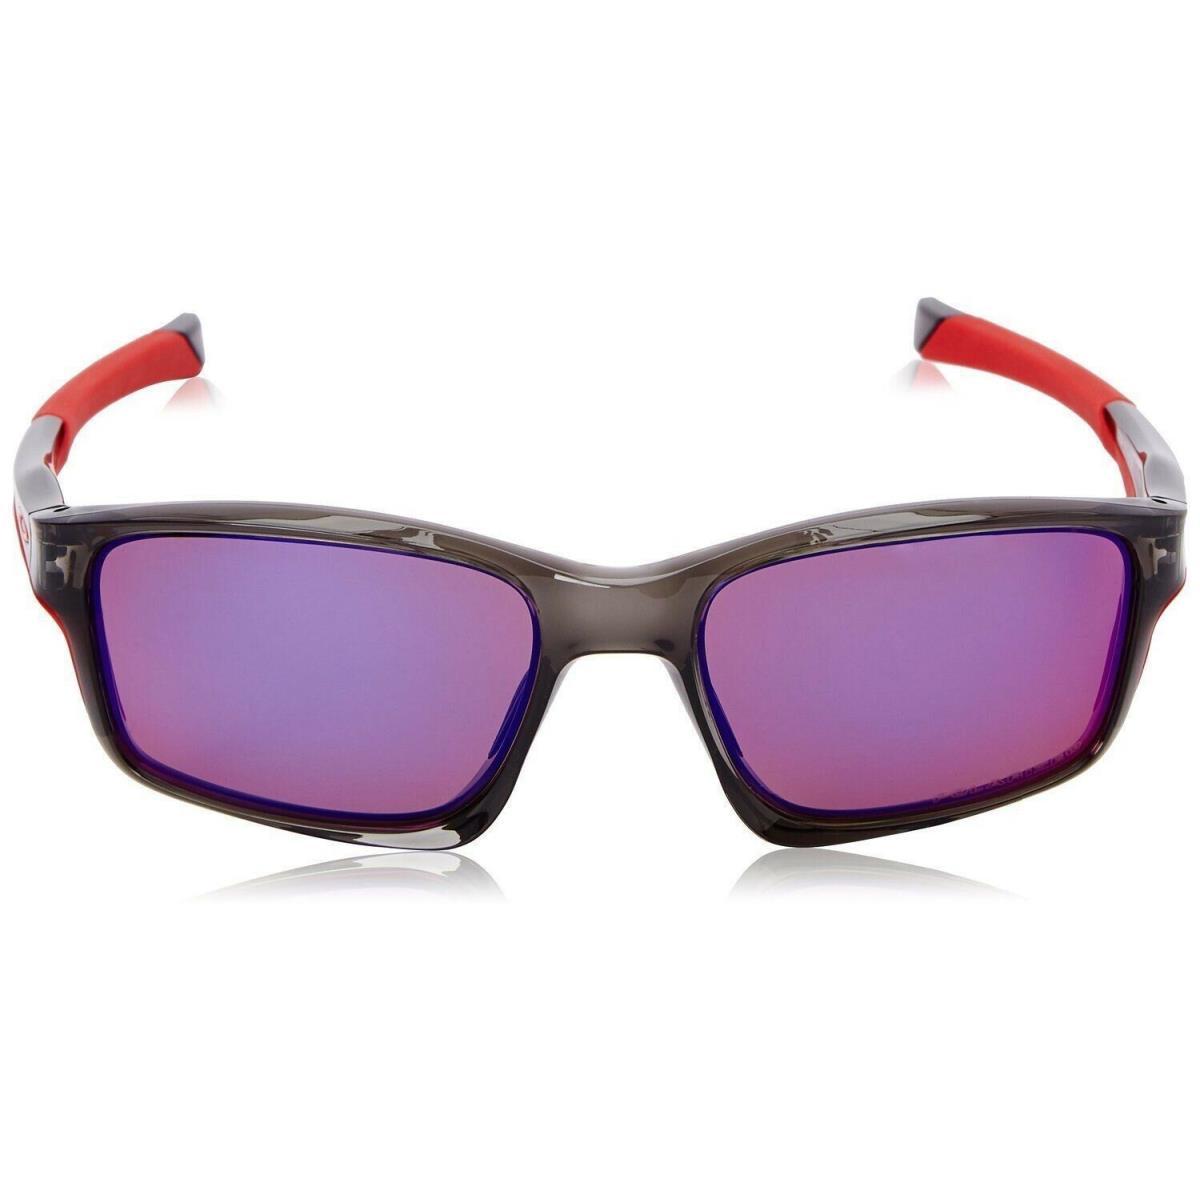 Oakley Polarized Chainlink OO9247-10 Gray Smoke Frame Red Iridium Sunglasses - Frame: Gray Smoke, Lens: Red Iridium